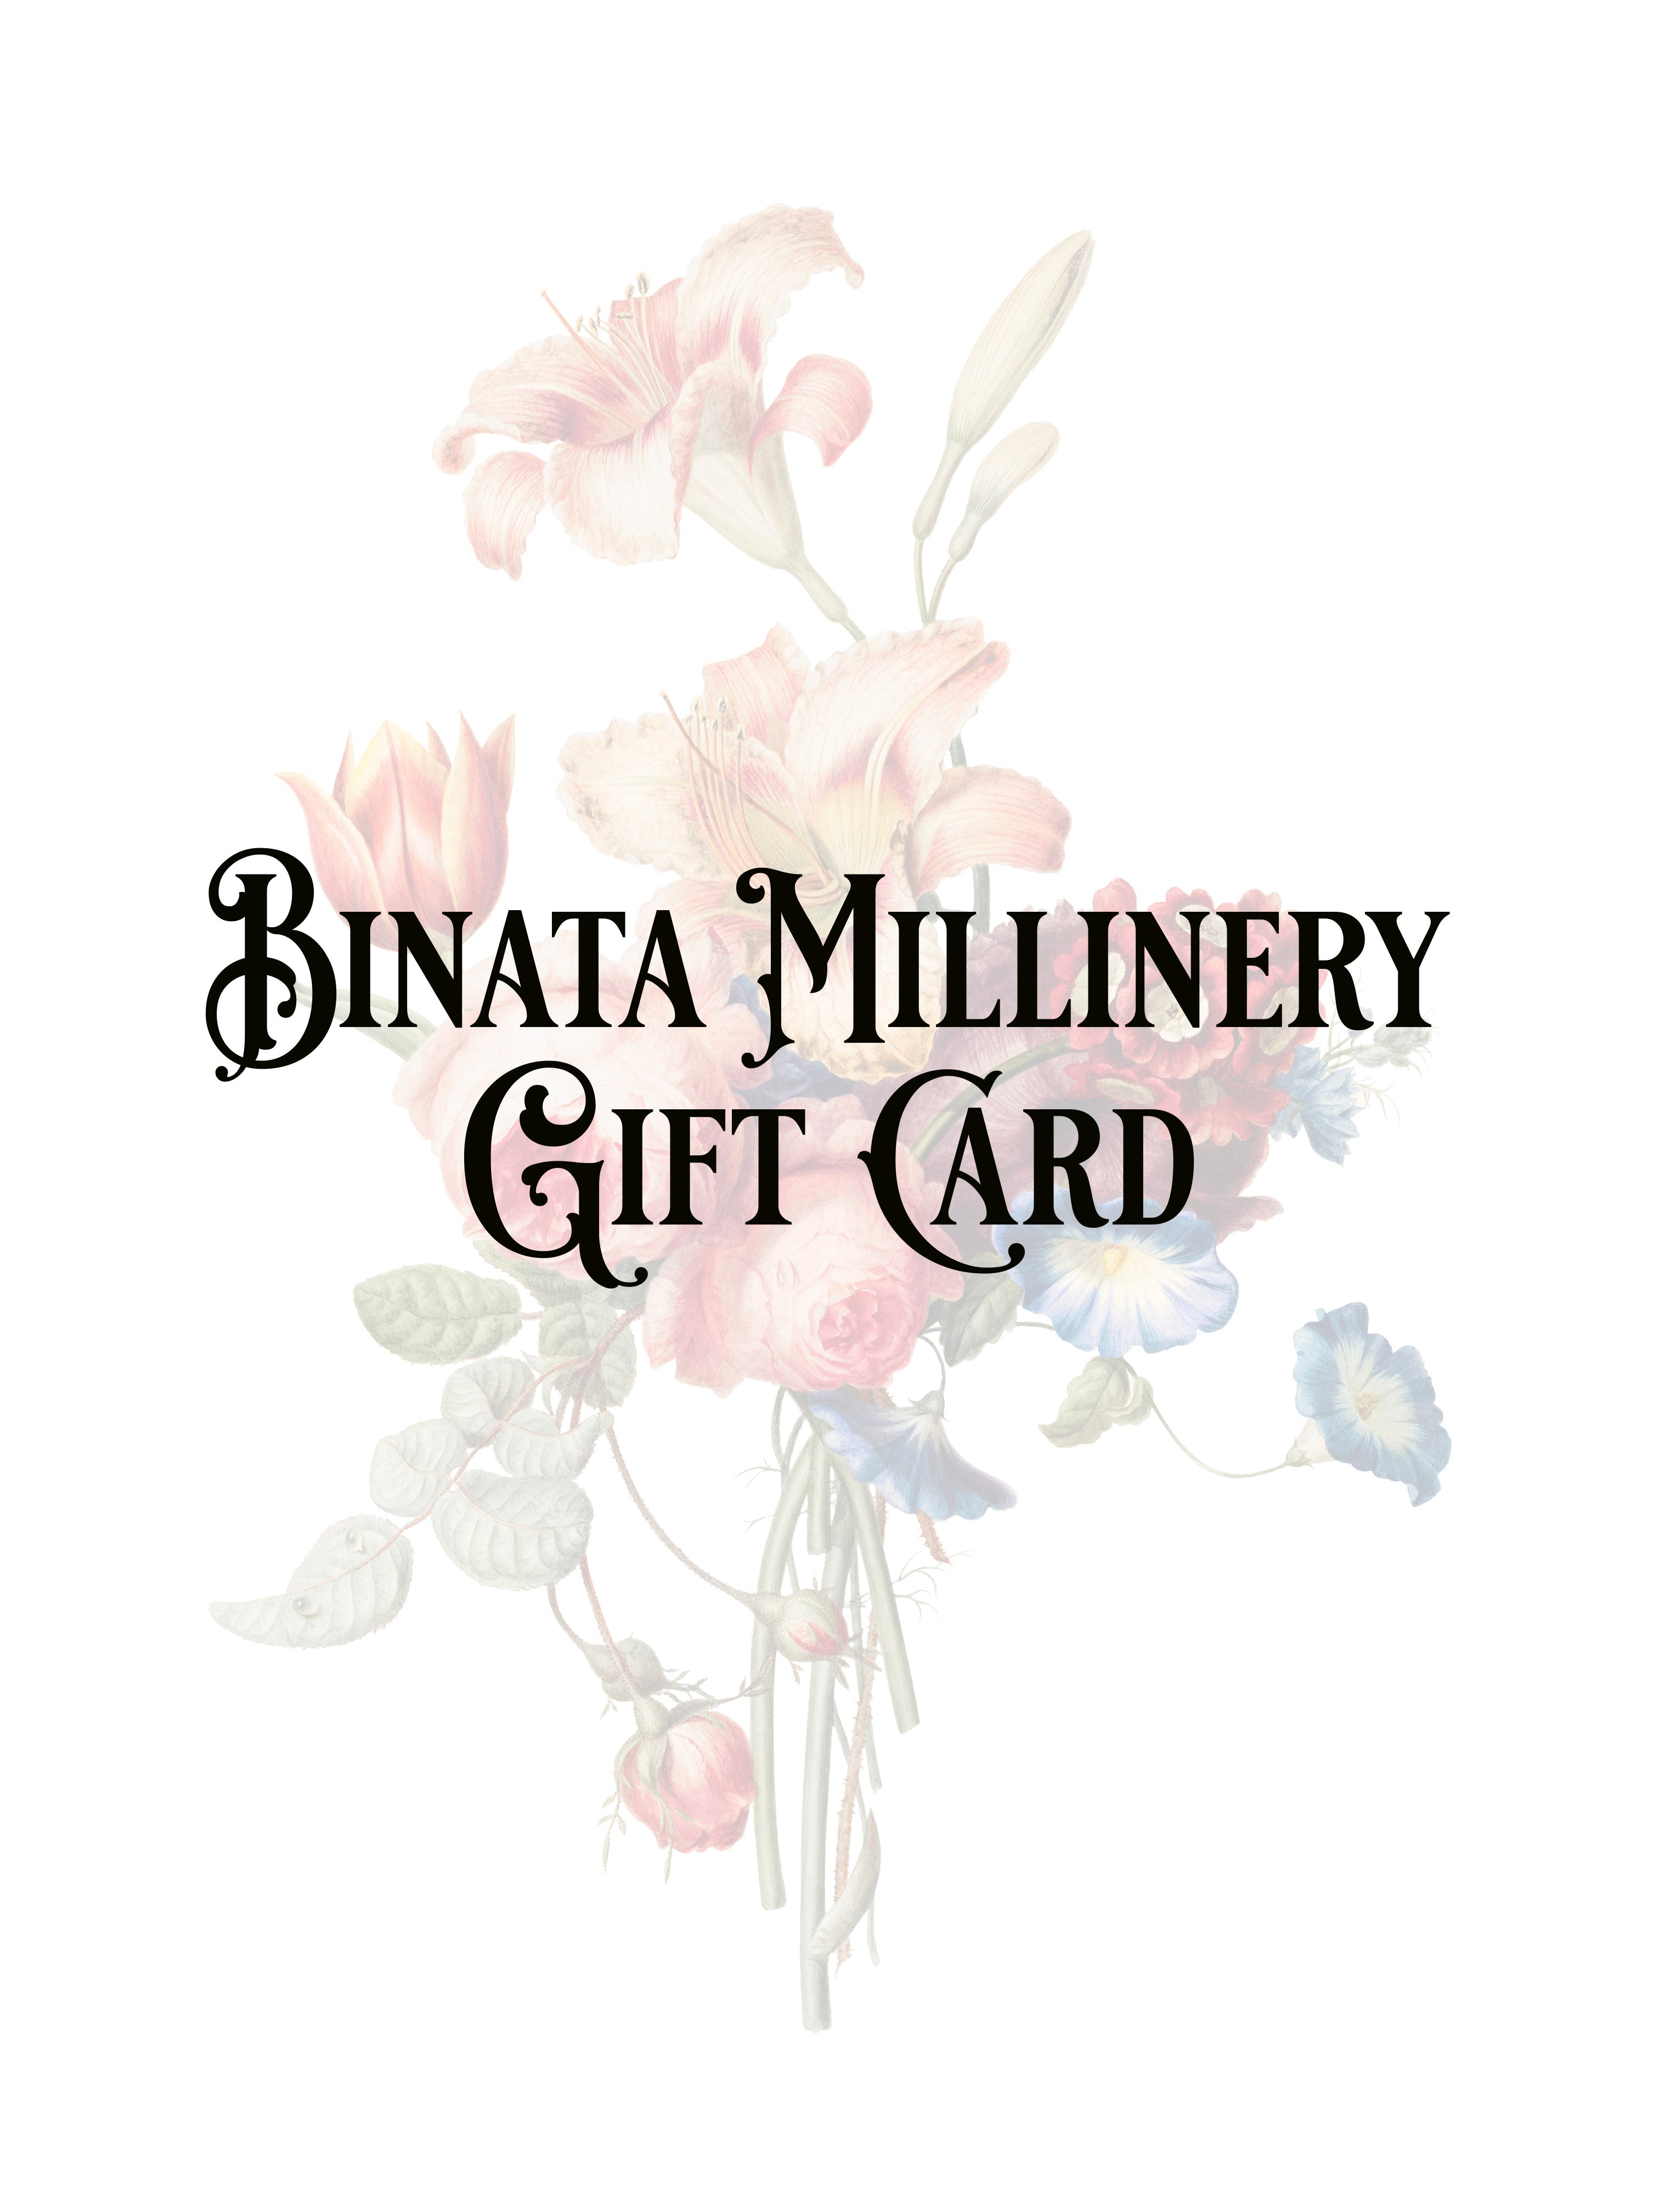 Binata Millinery Gift Card